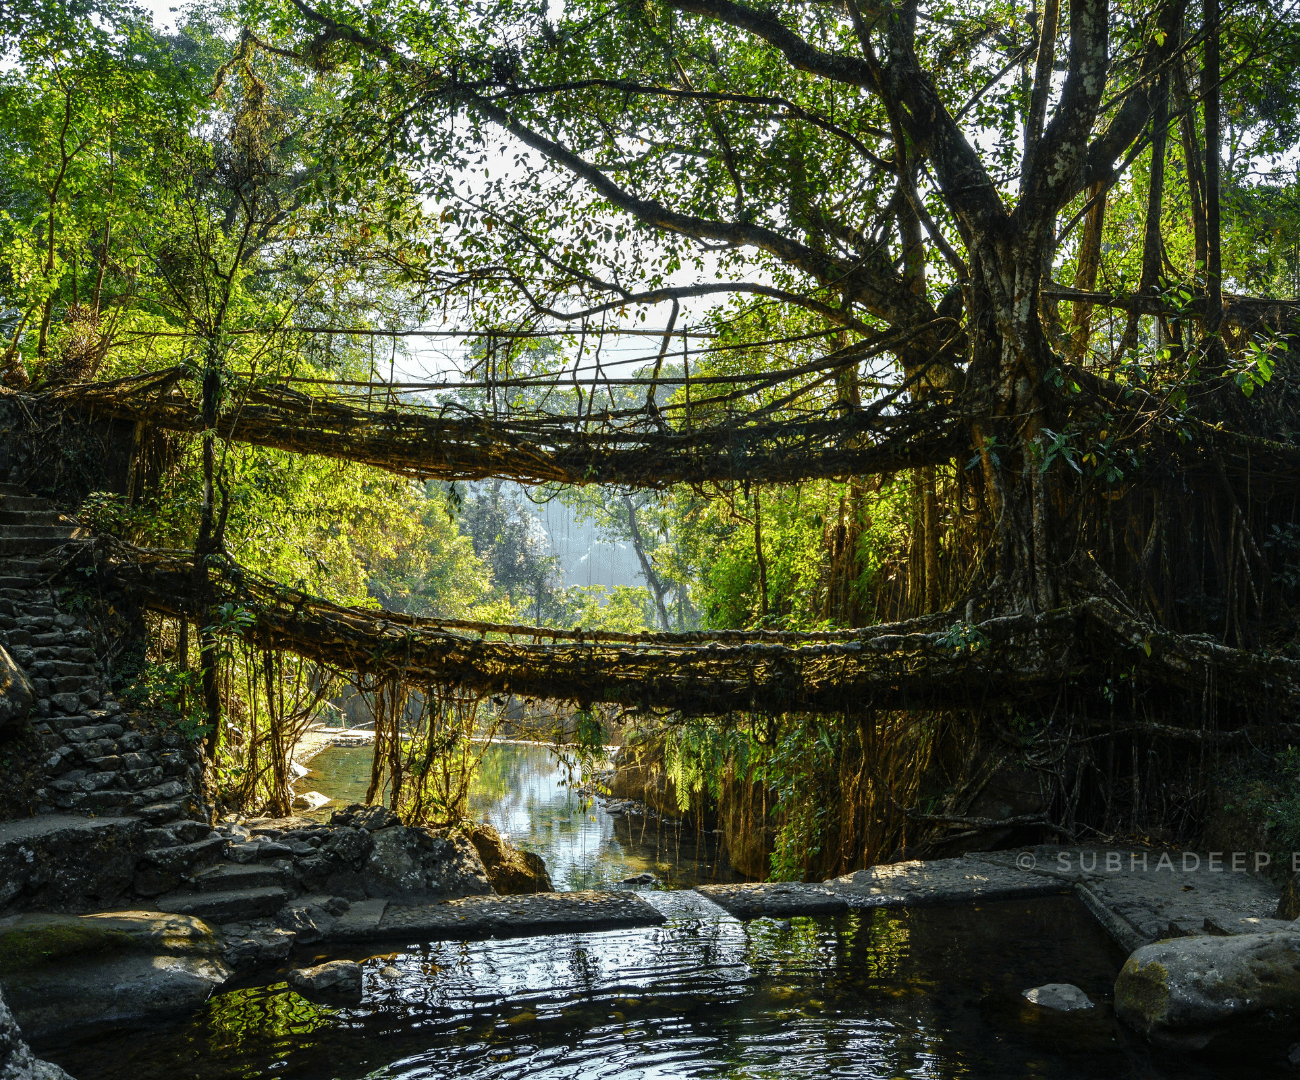 Double decker living root bridge in meghalaya